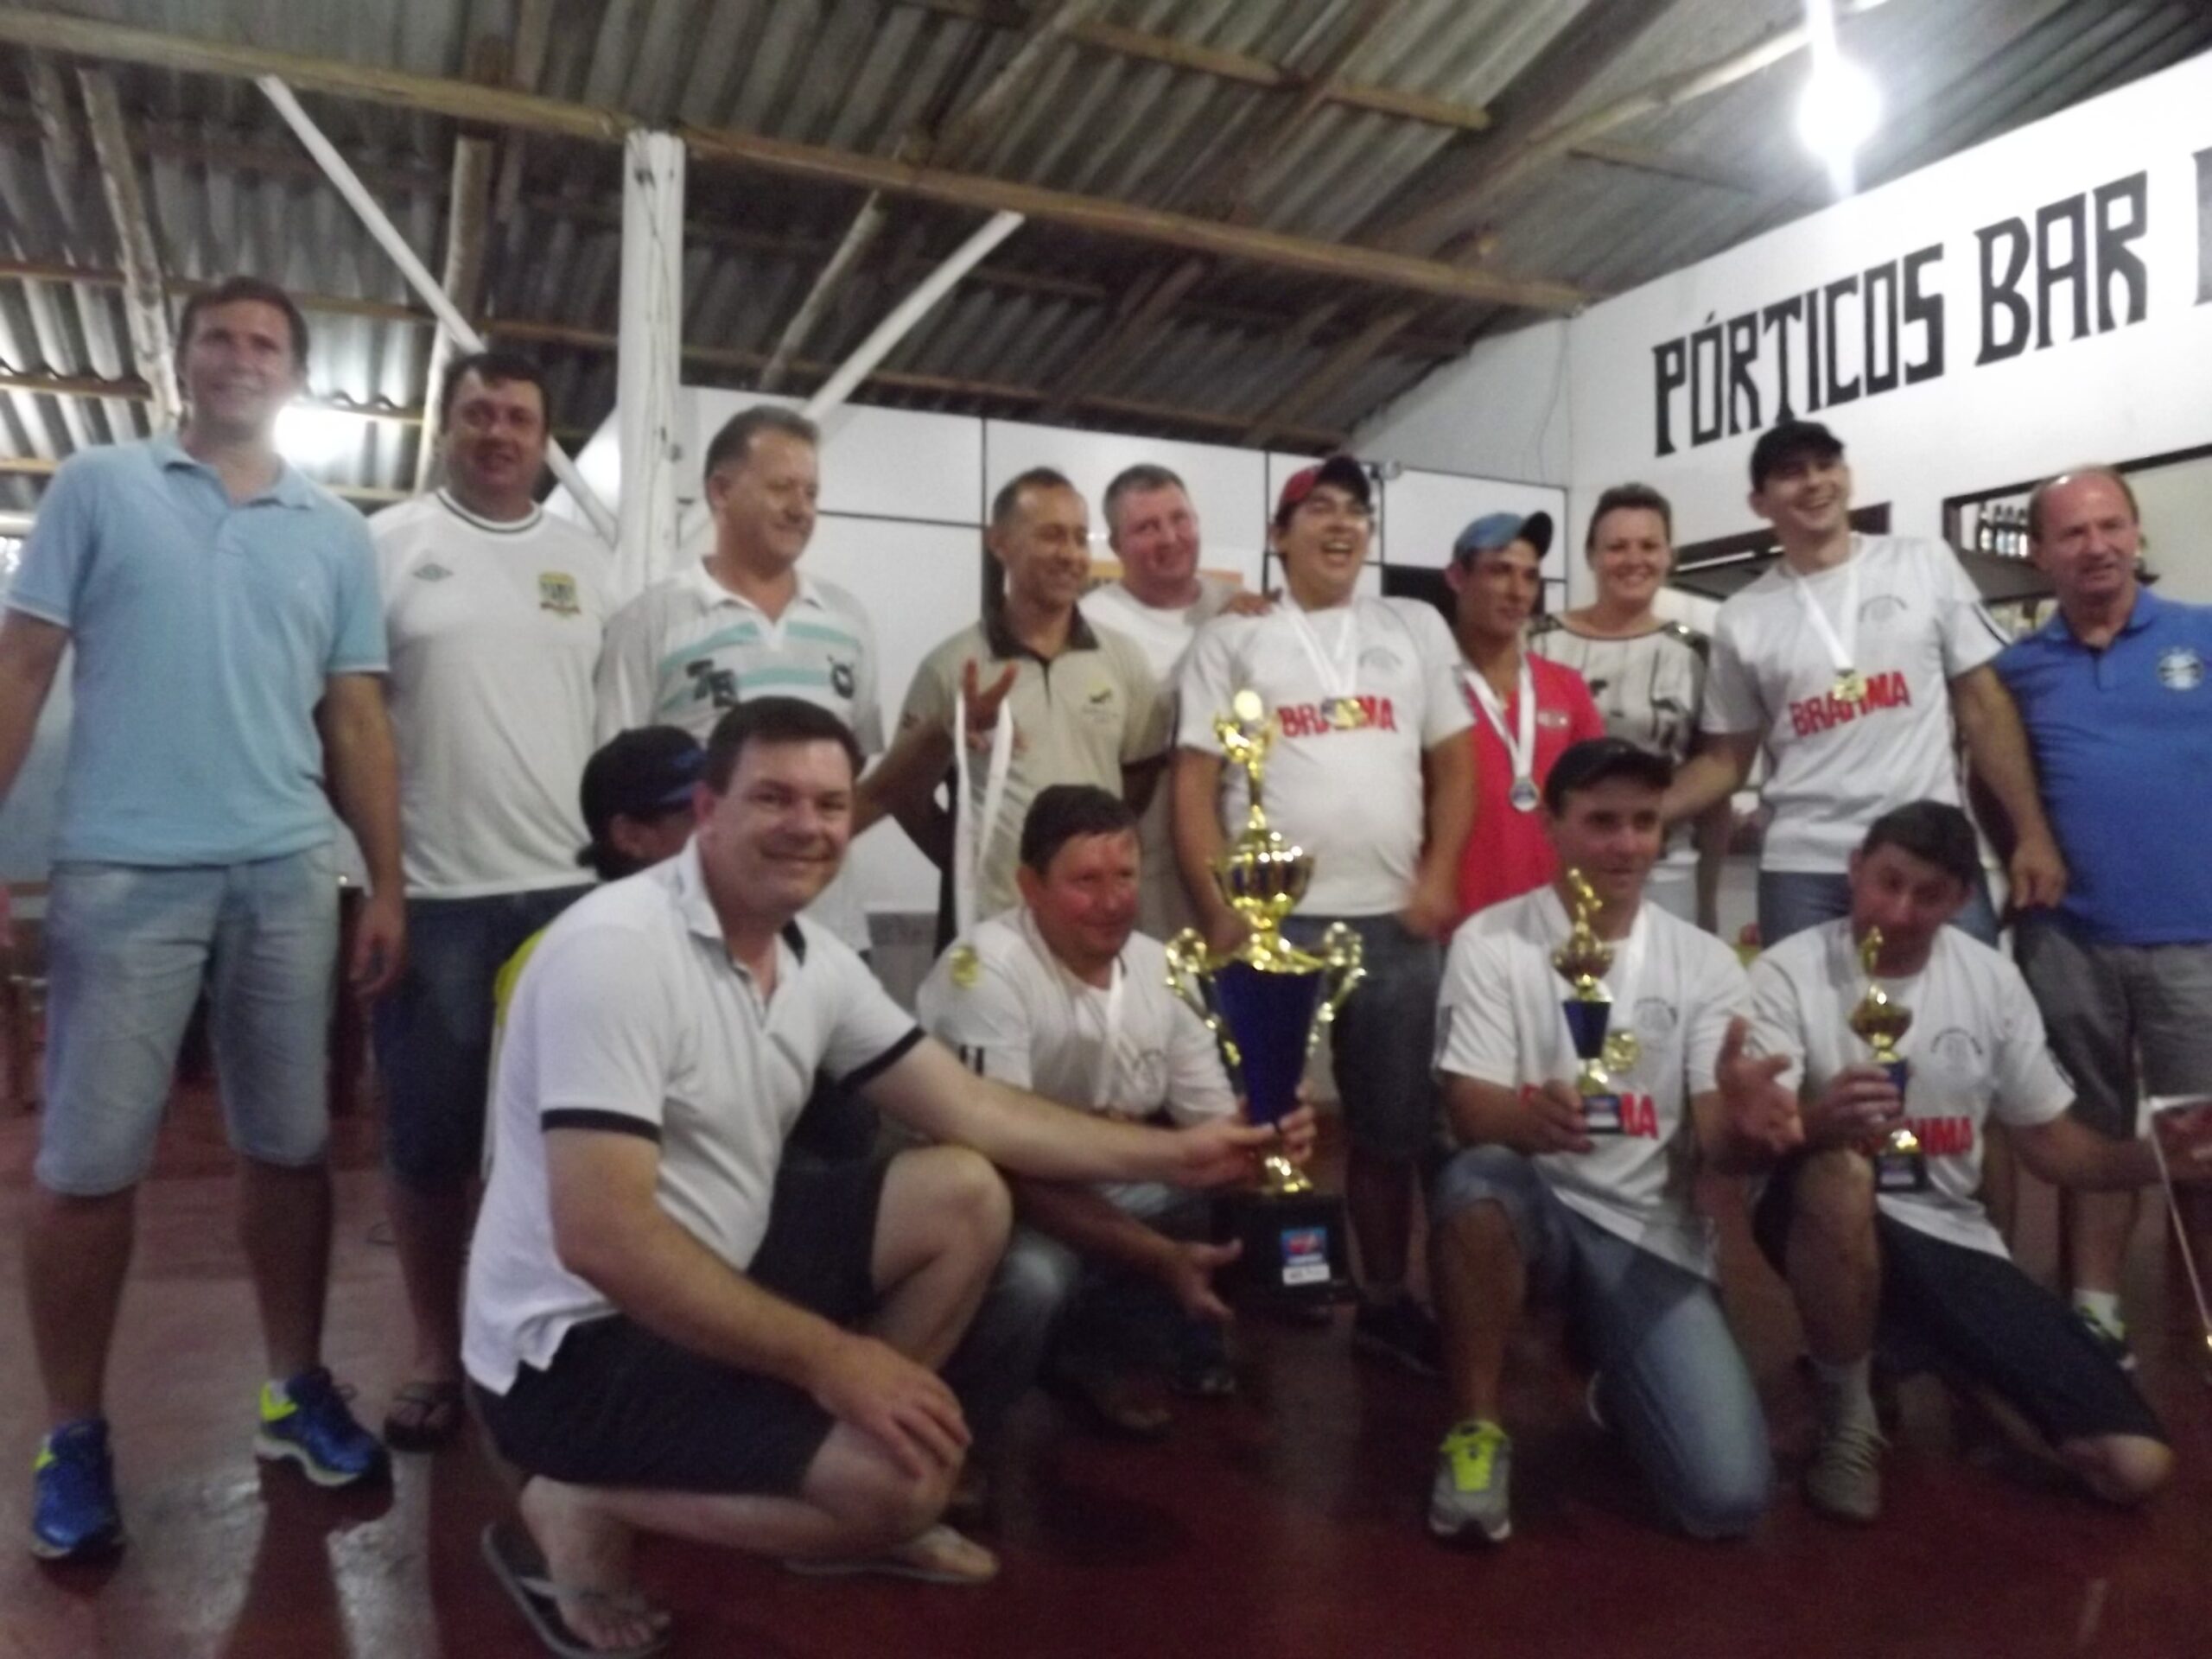 Equipe do Pórticos Bar conquistou o título do Campeonato de Bocha 48